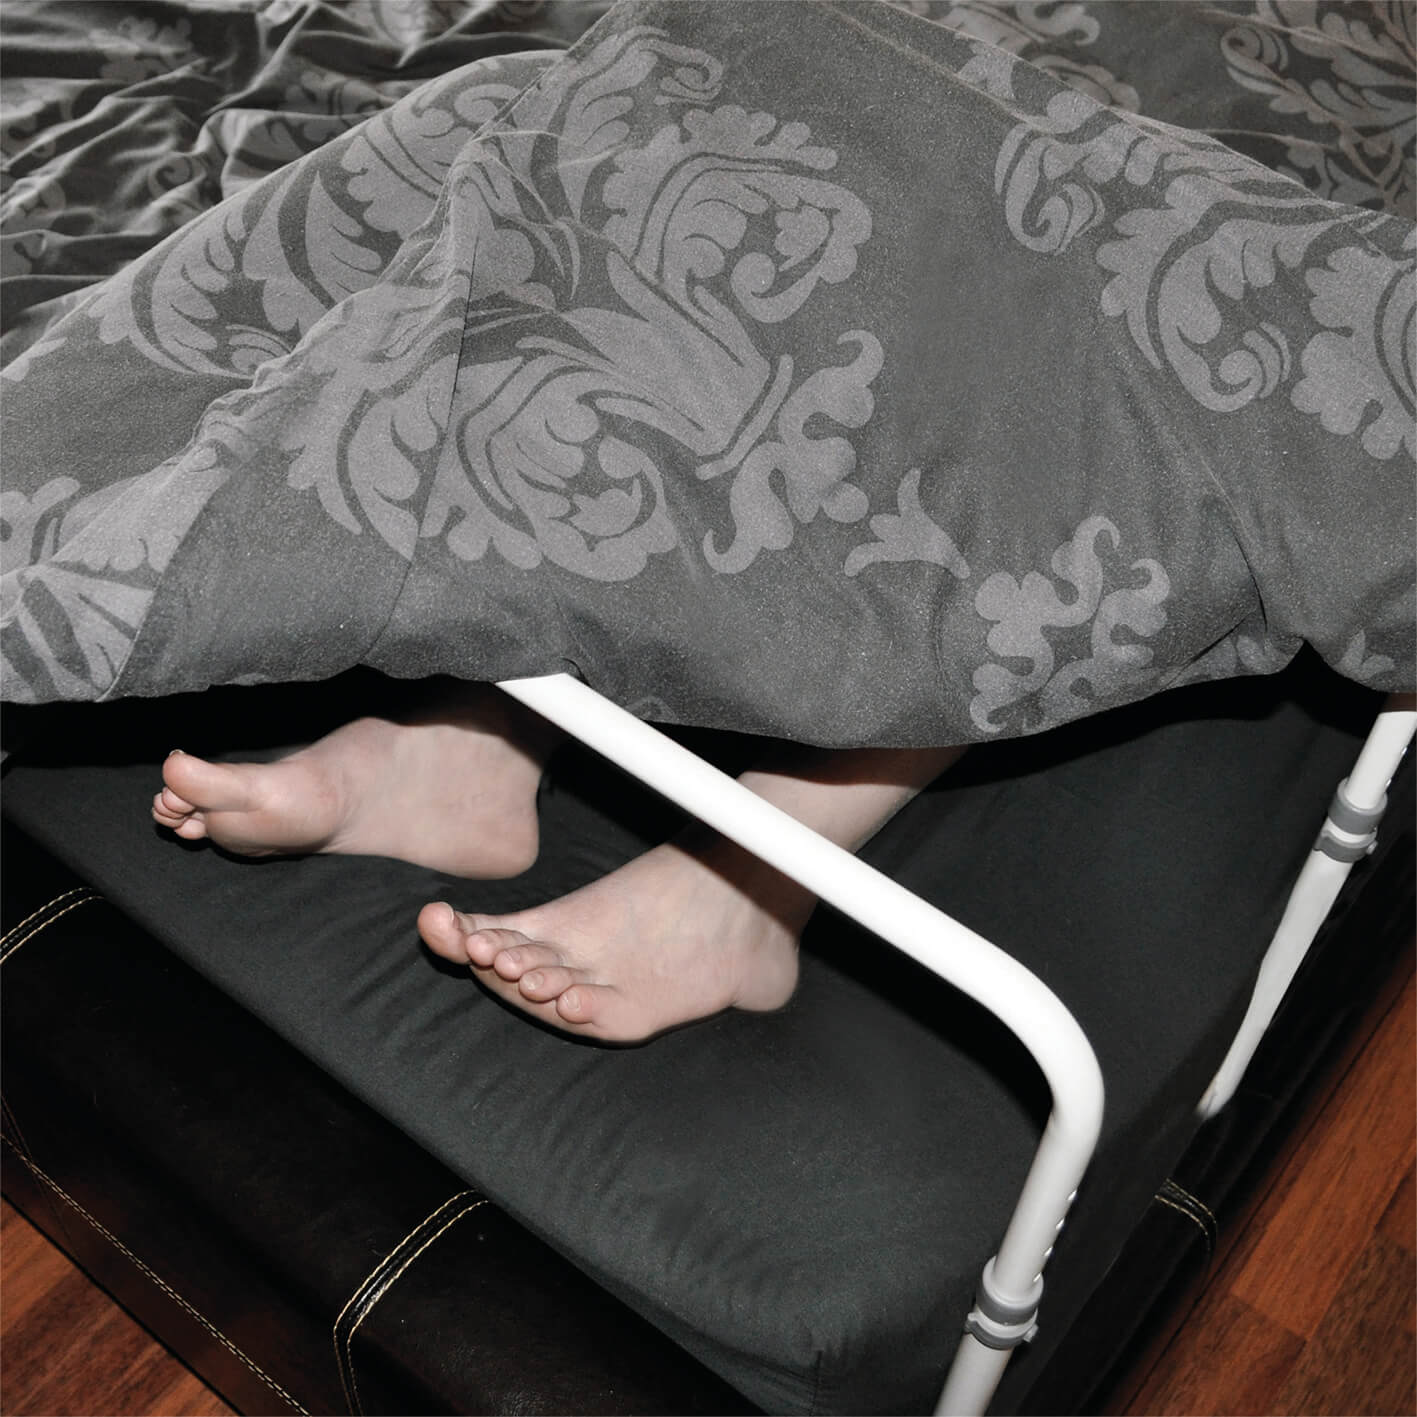 Bed Cradle over feet